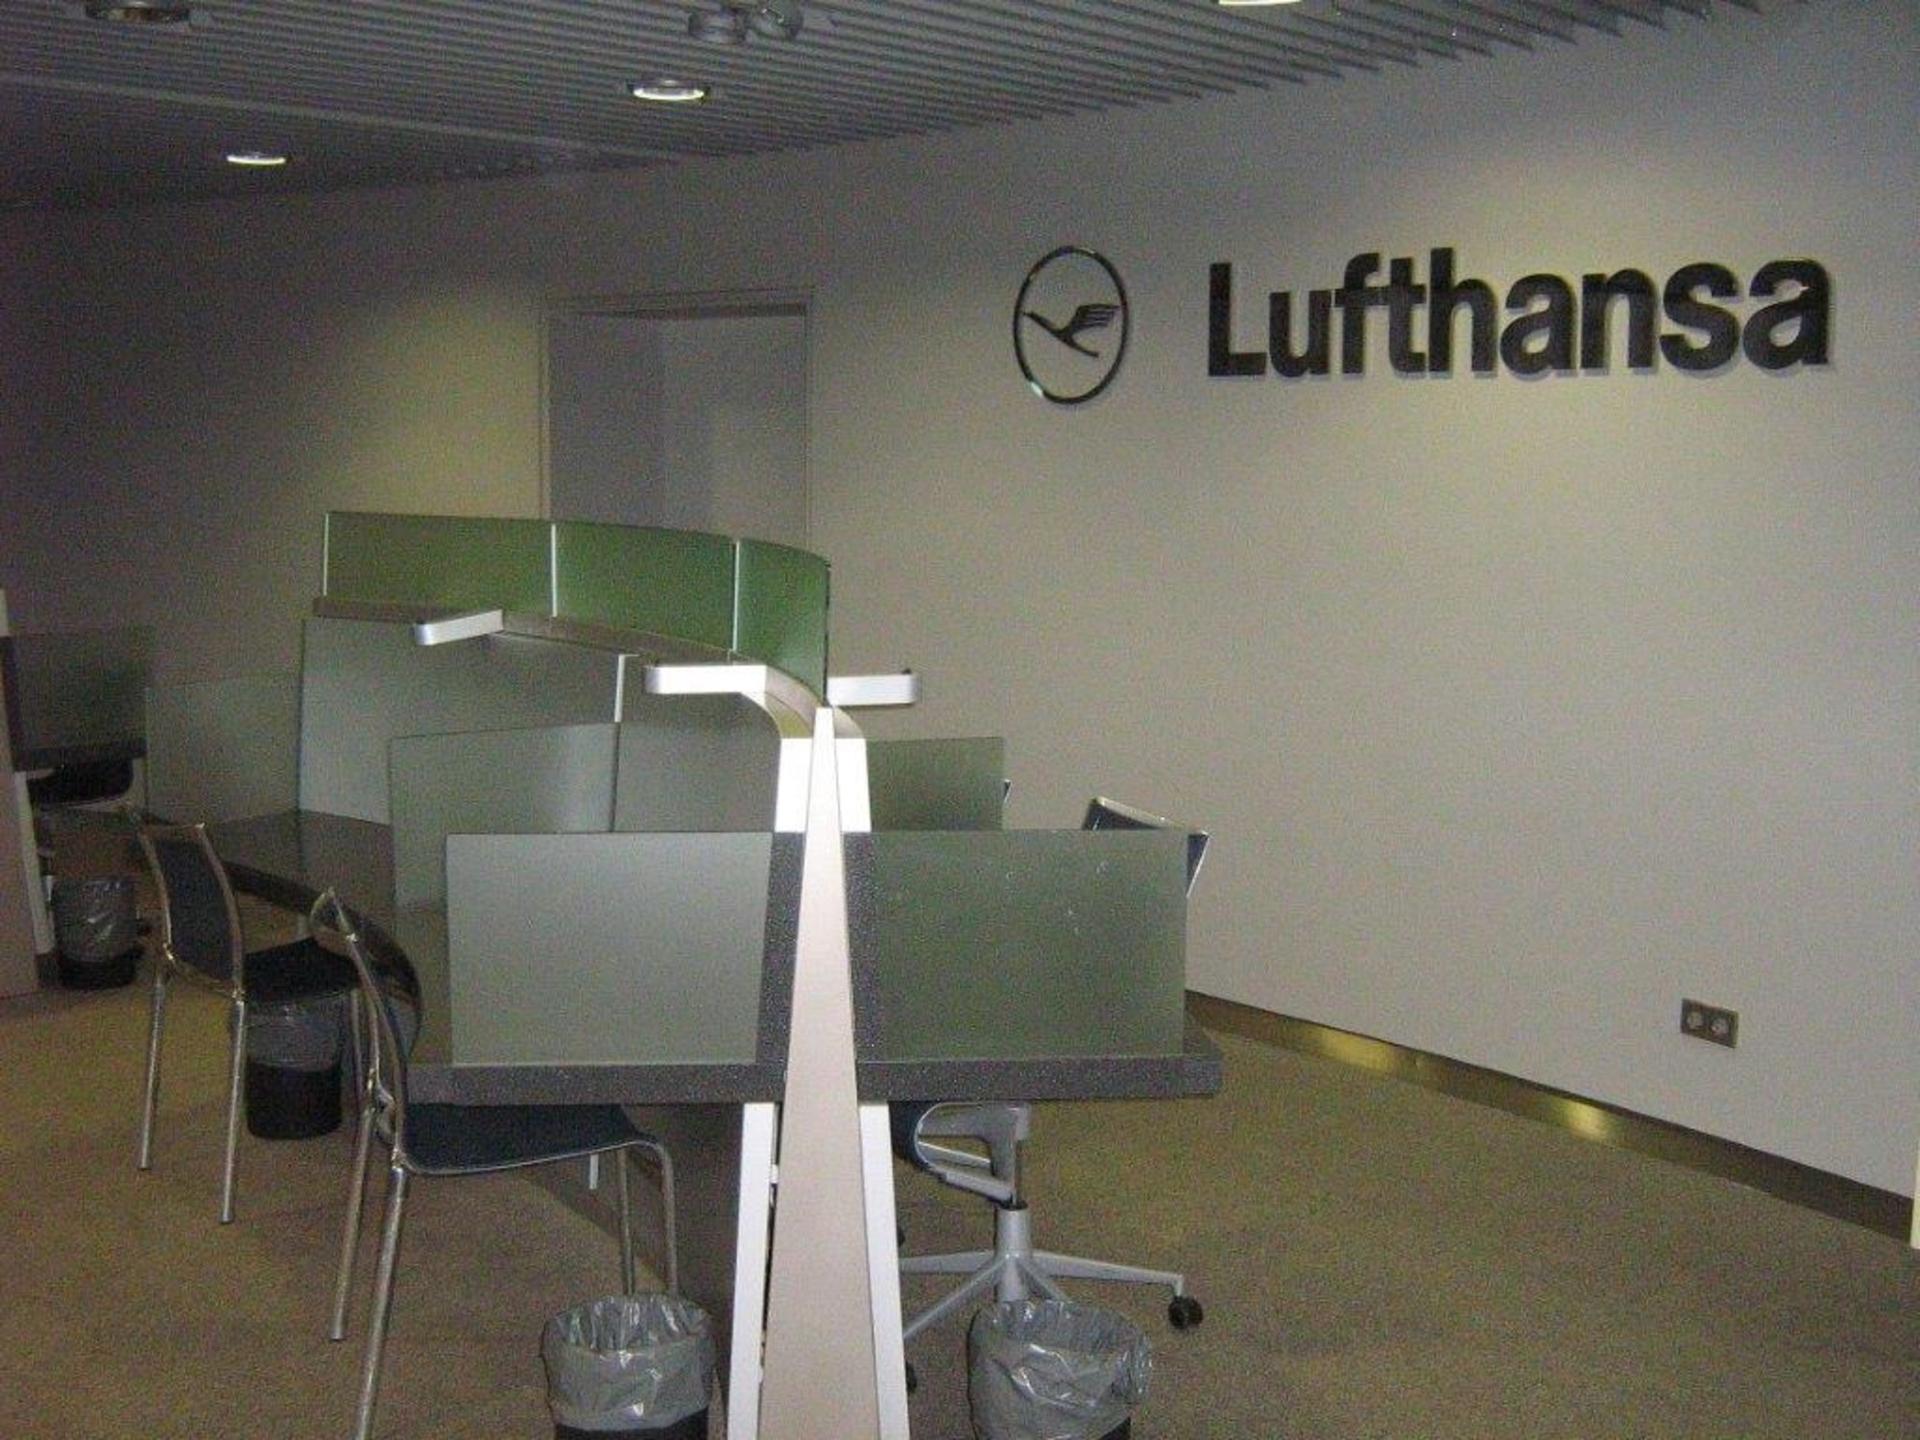 Lufthansa Business Lounge image 12 of 22